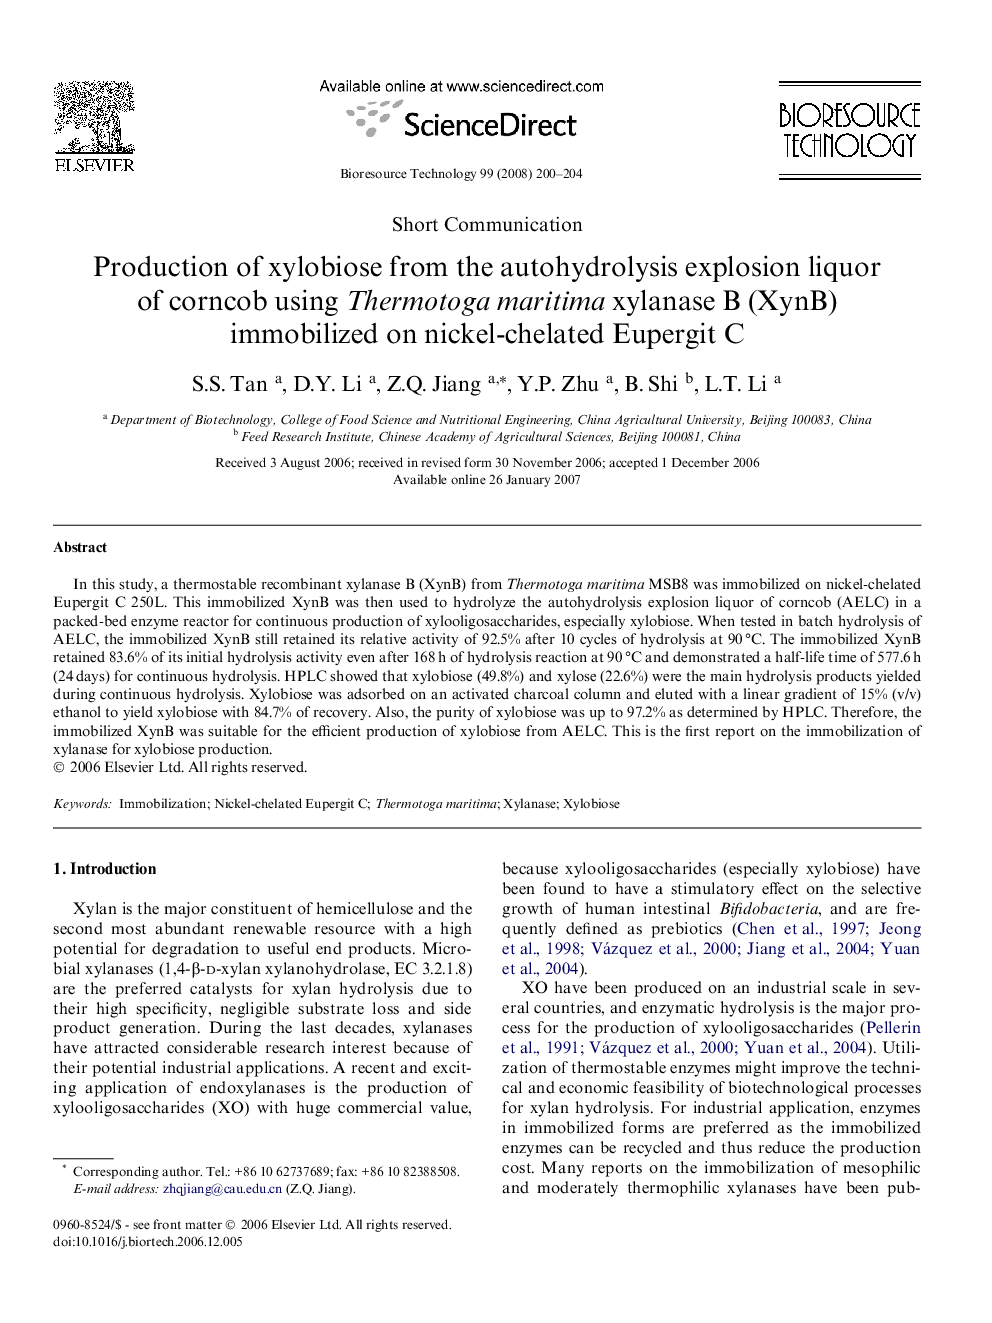 Production of xylobiose from the autohydrolysis explosion liquor of corncob using Thermotoga maritima xylanase B (XynB) immobilized on nickel-chelated Eupergit C